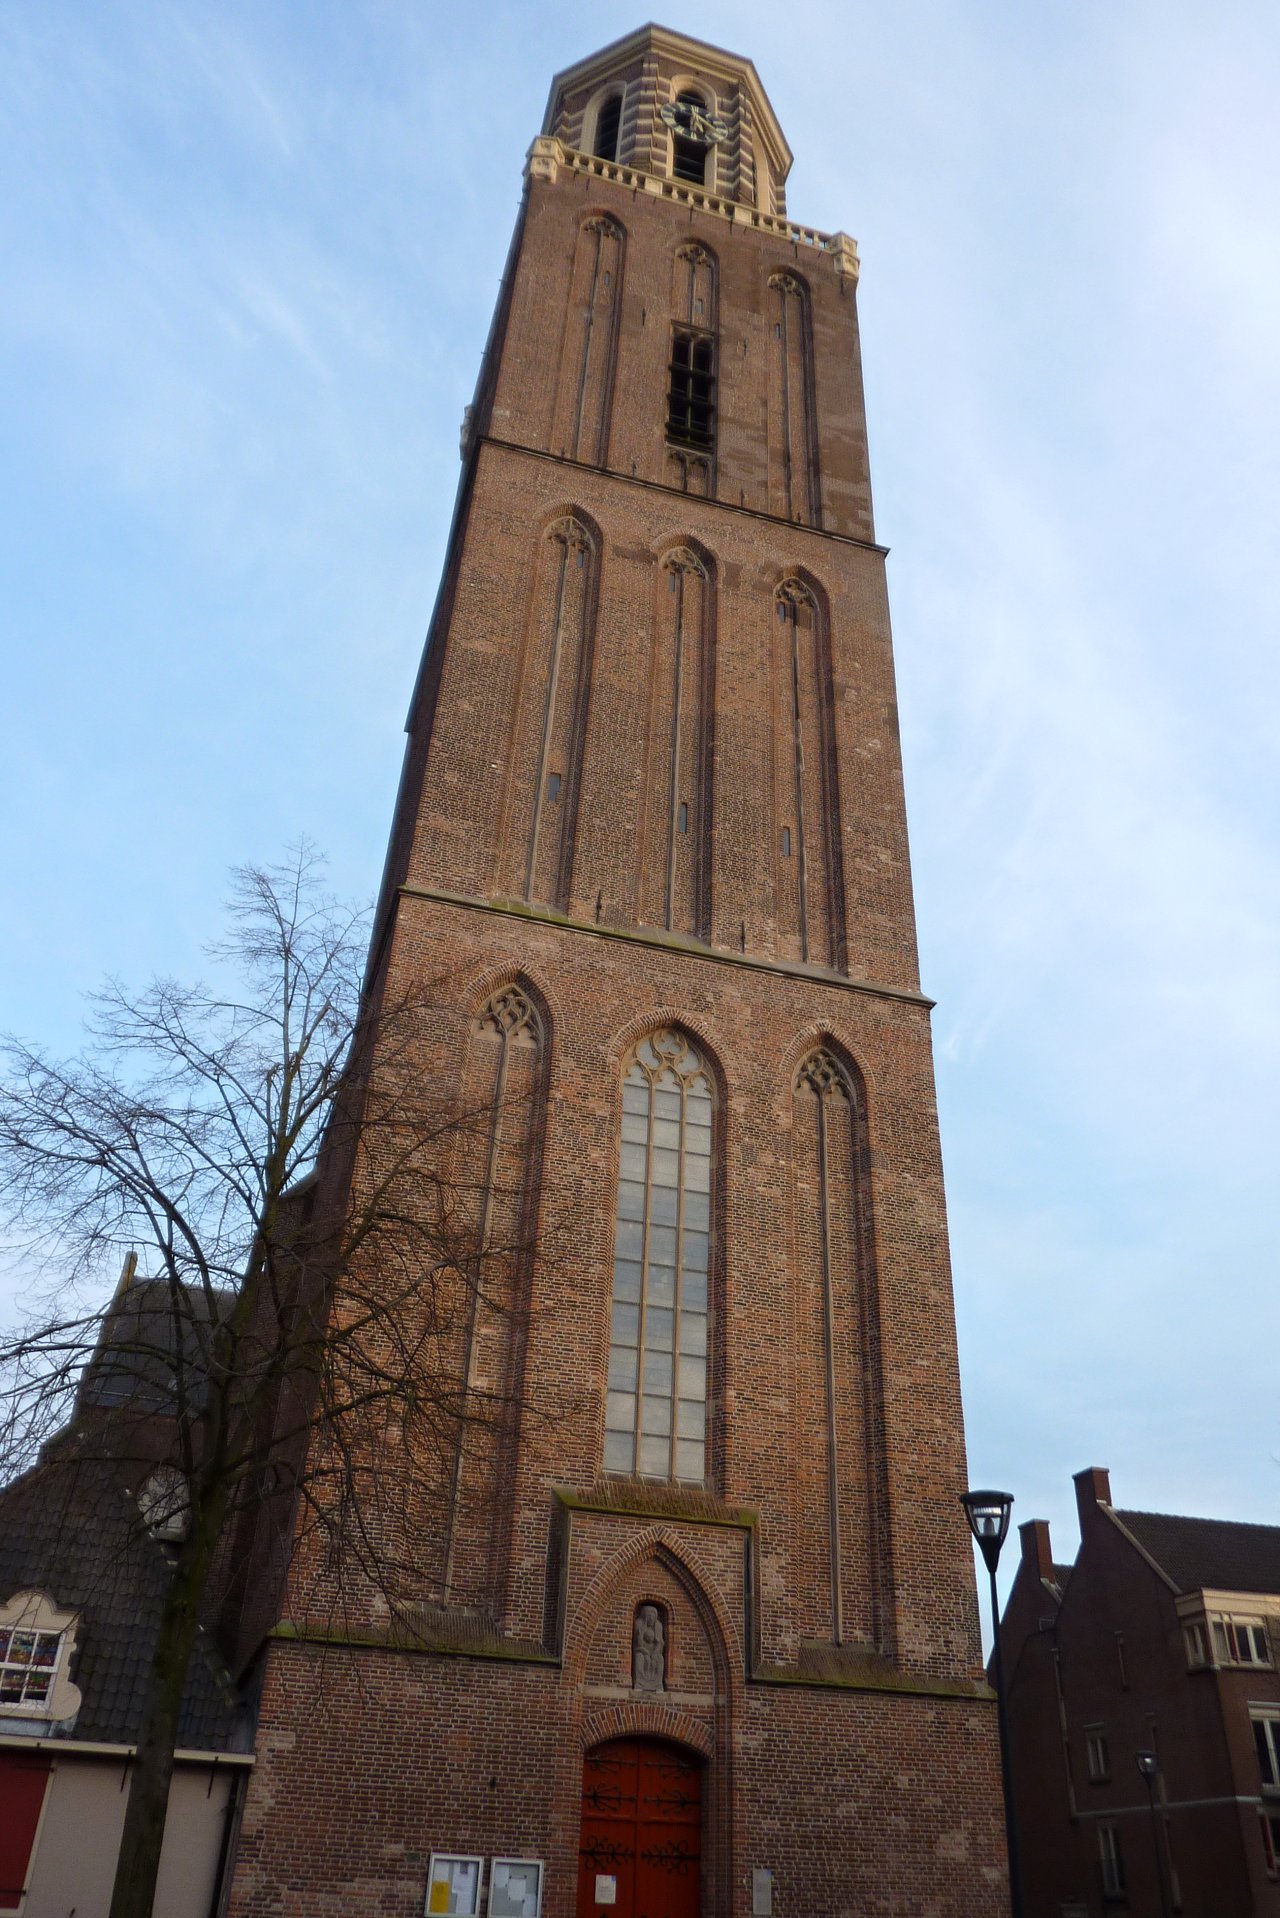 Peperbus, Zwolle, Netherlands